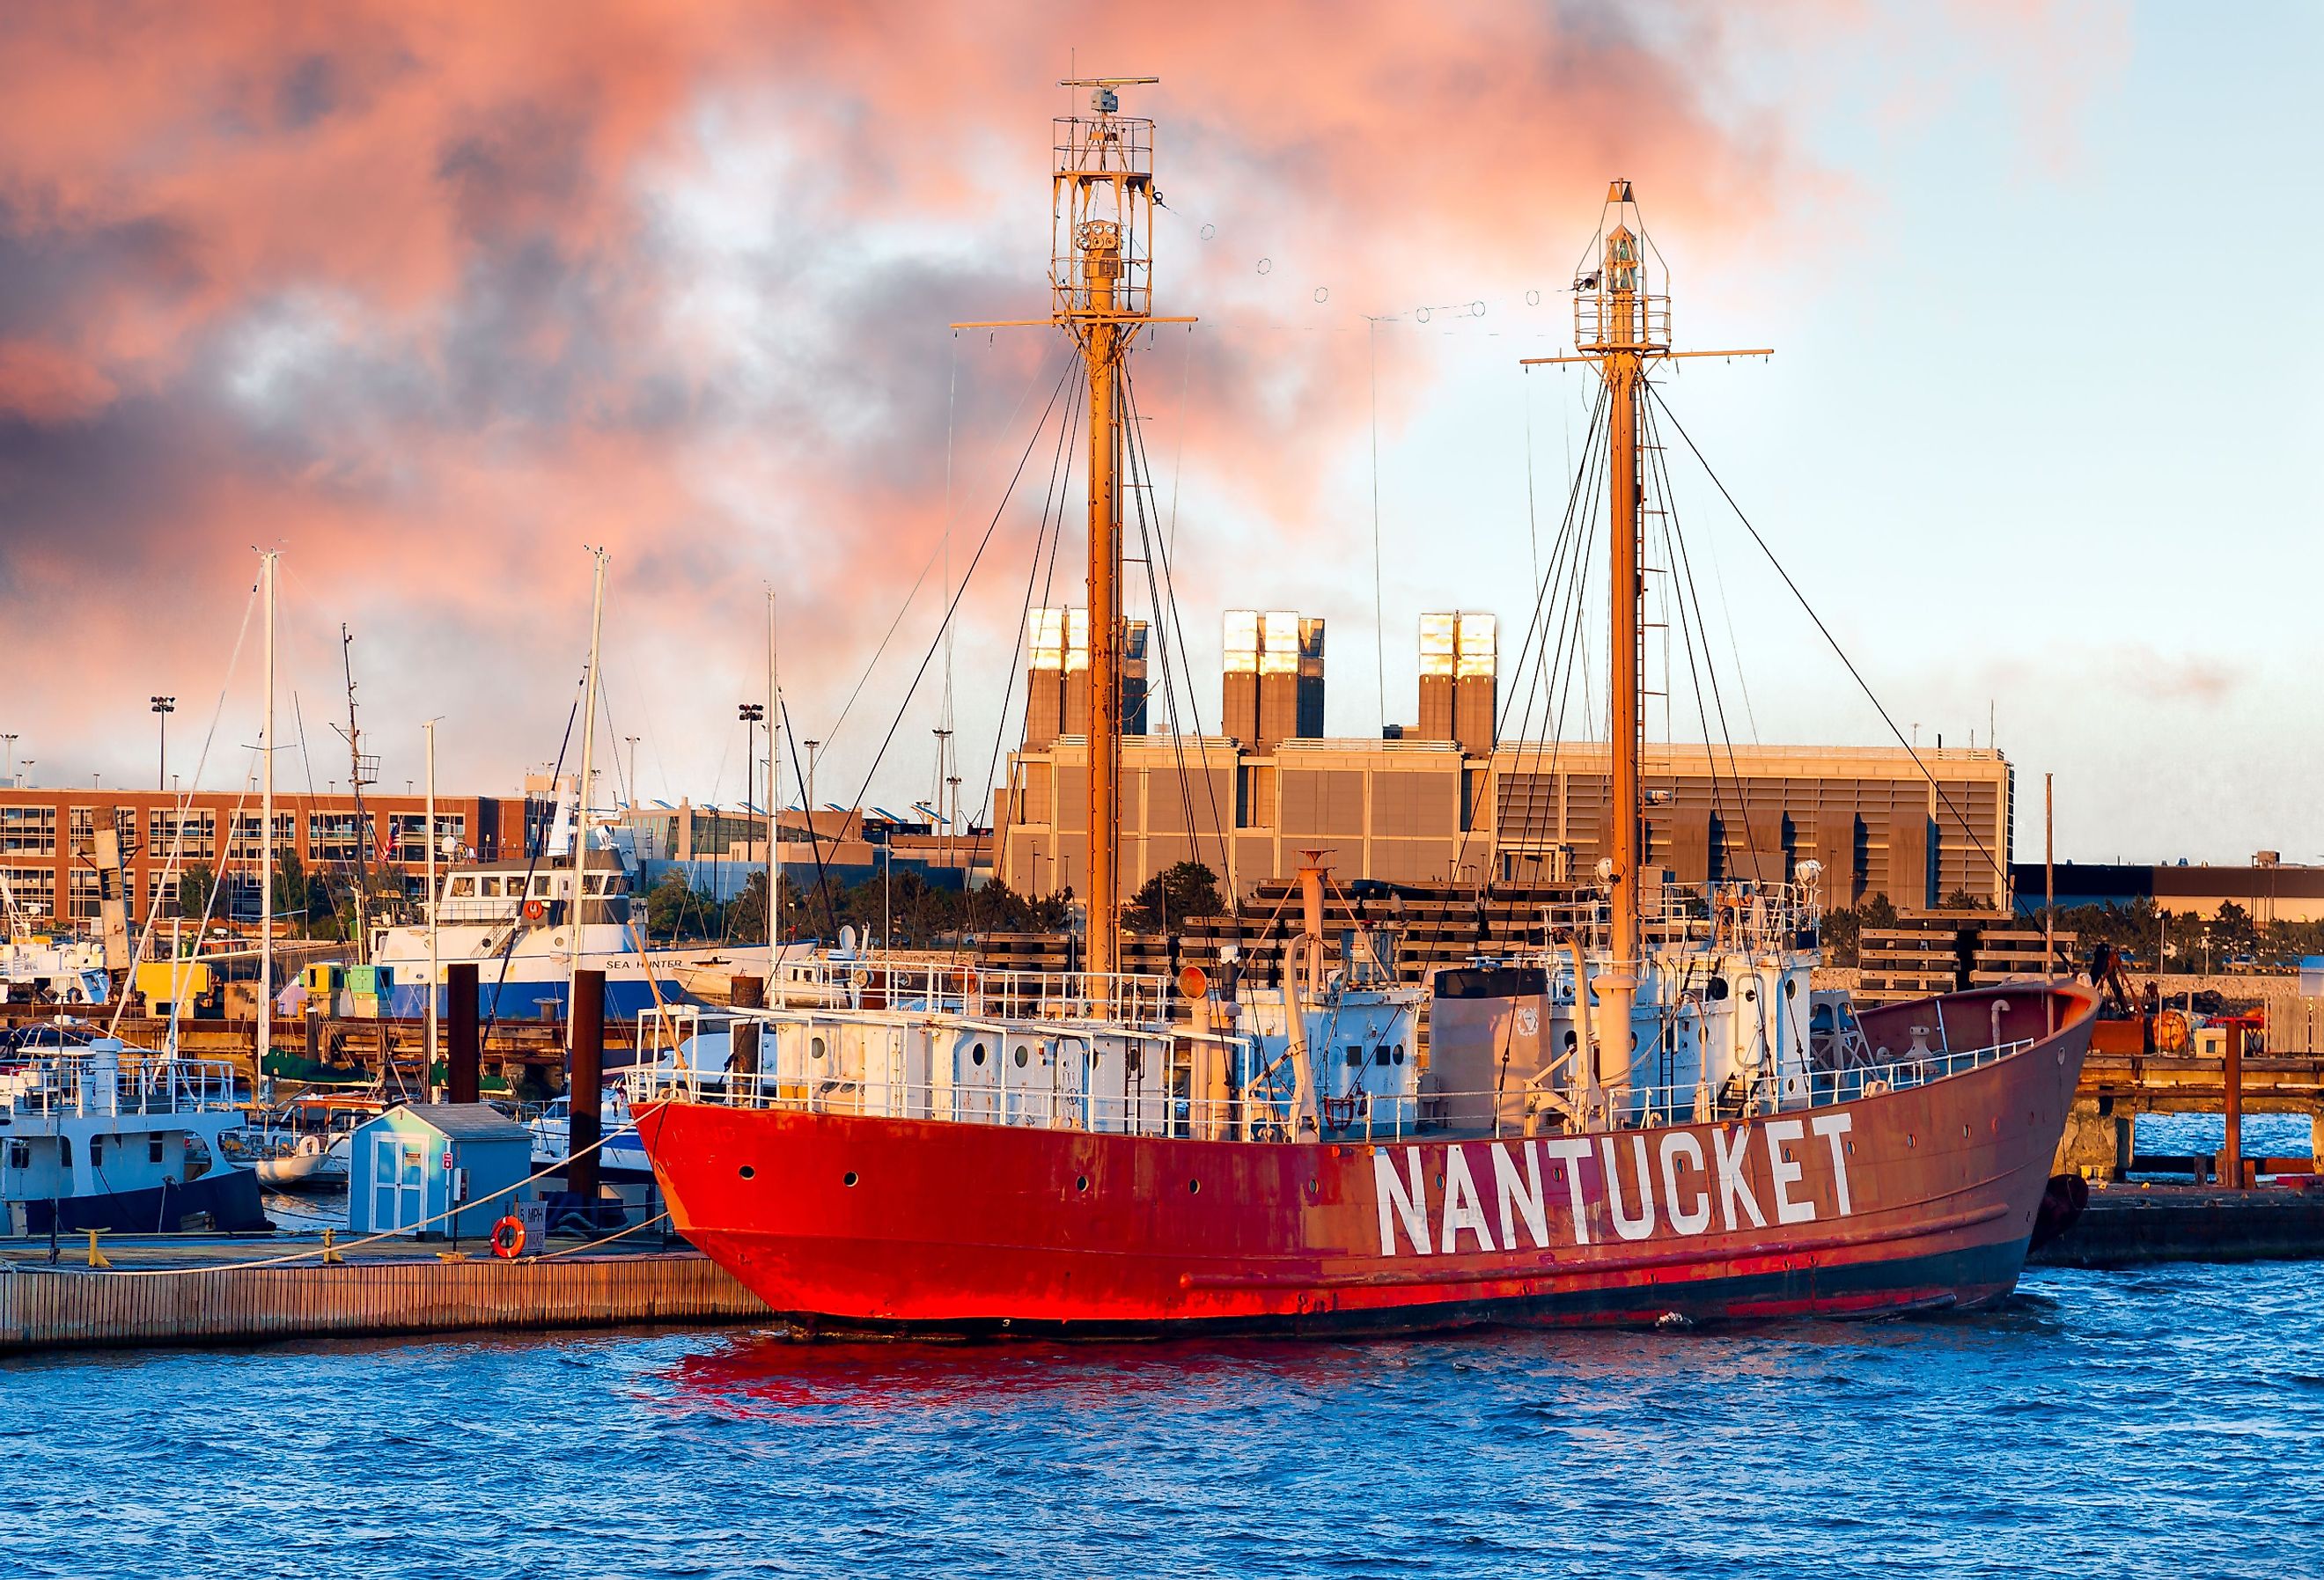 Historic Lightship on Nantucket dock. Image credit cdrin via Shutterstock. 